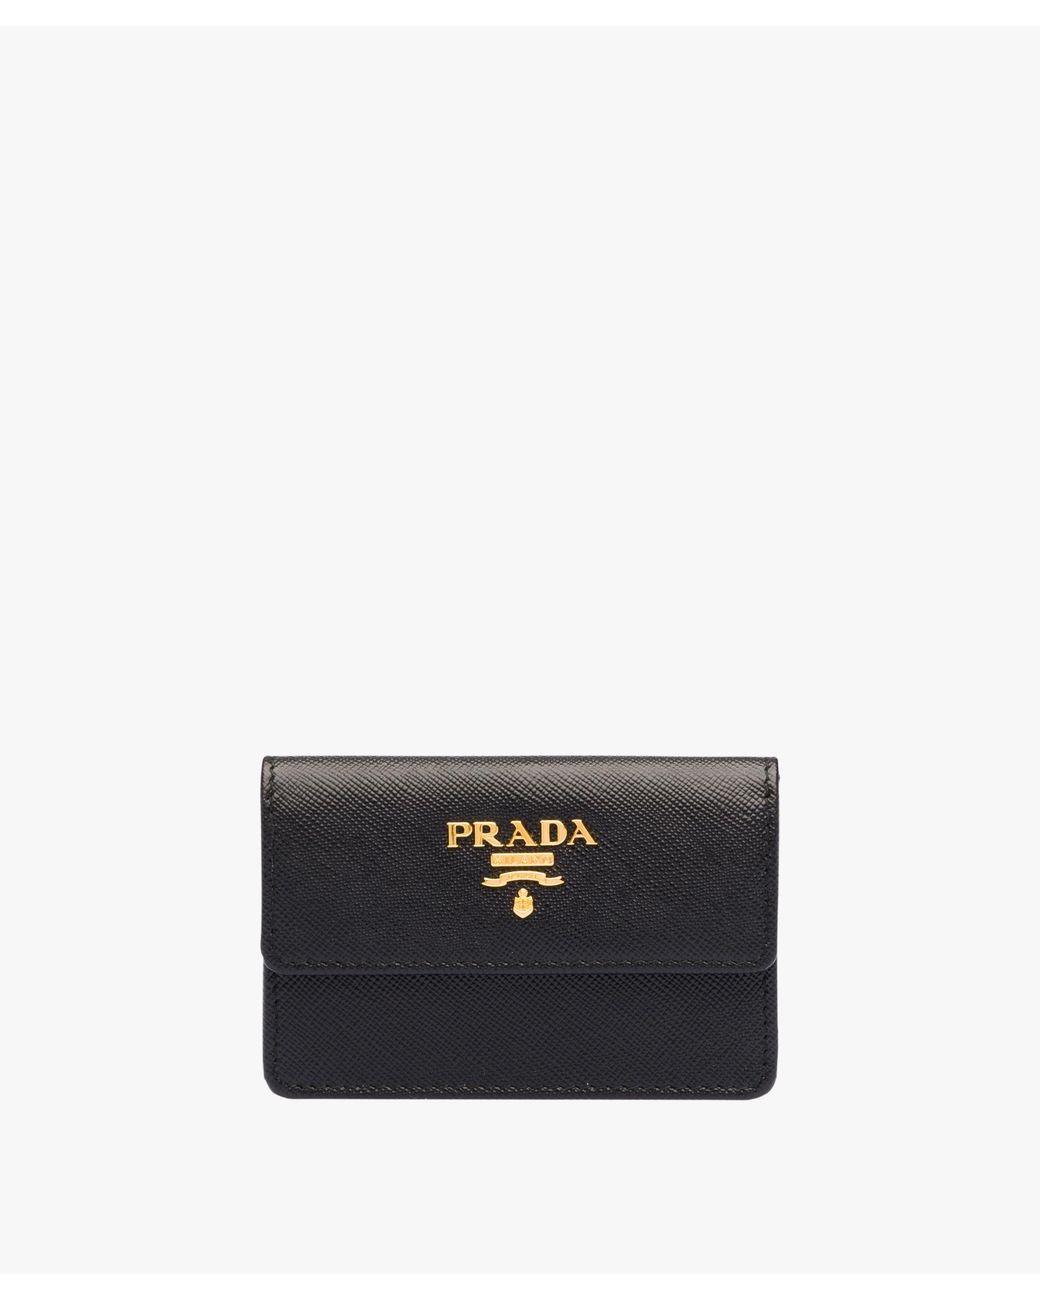 Prada Business Card Holder in Black | Lyst